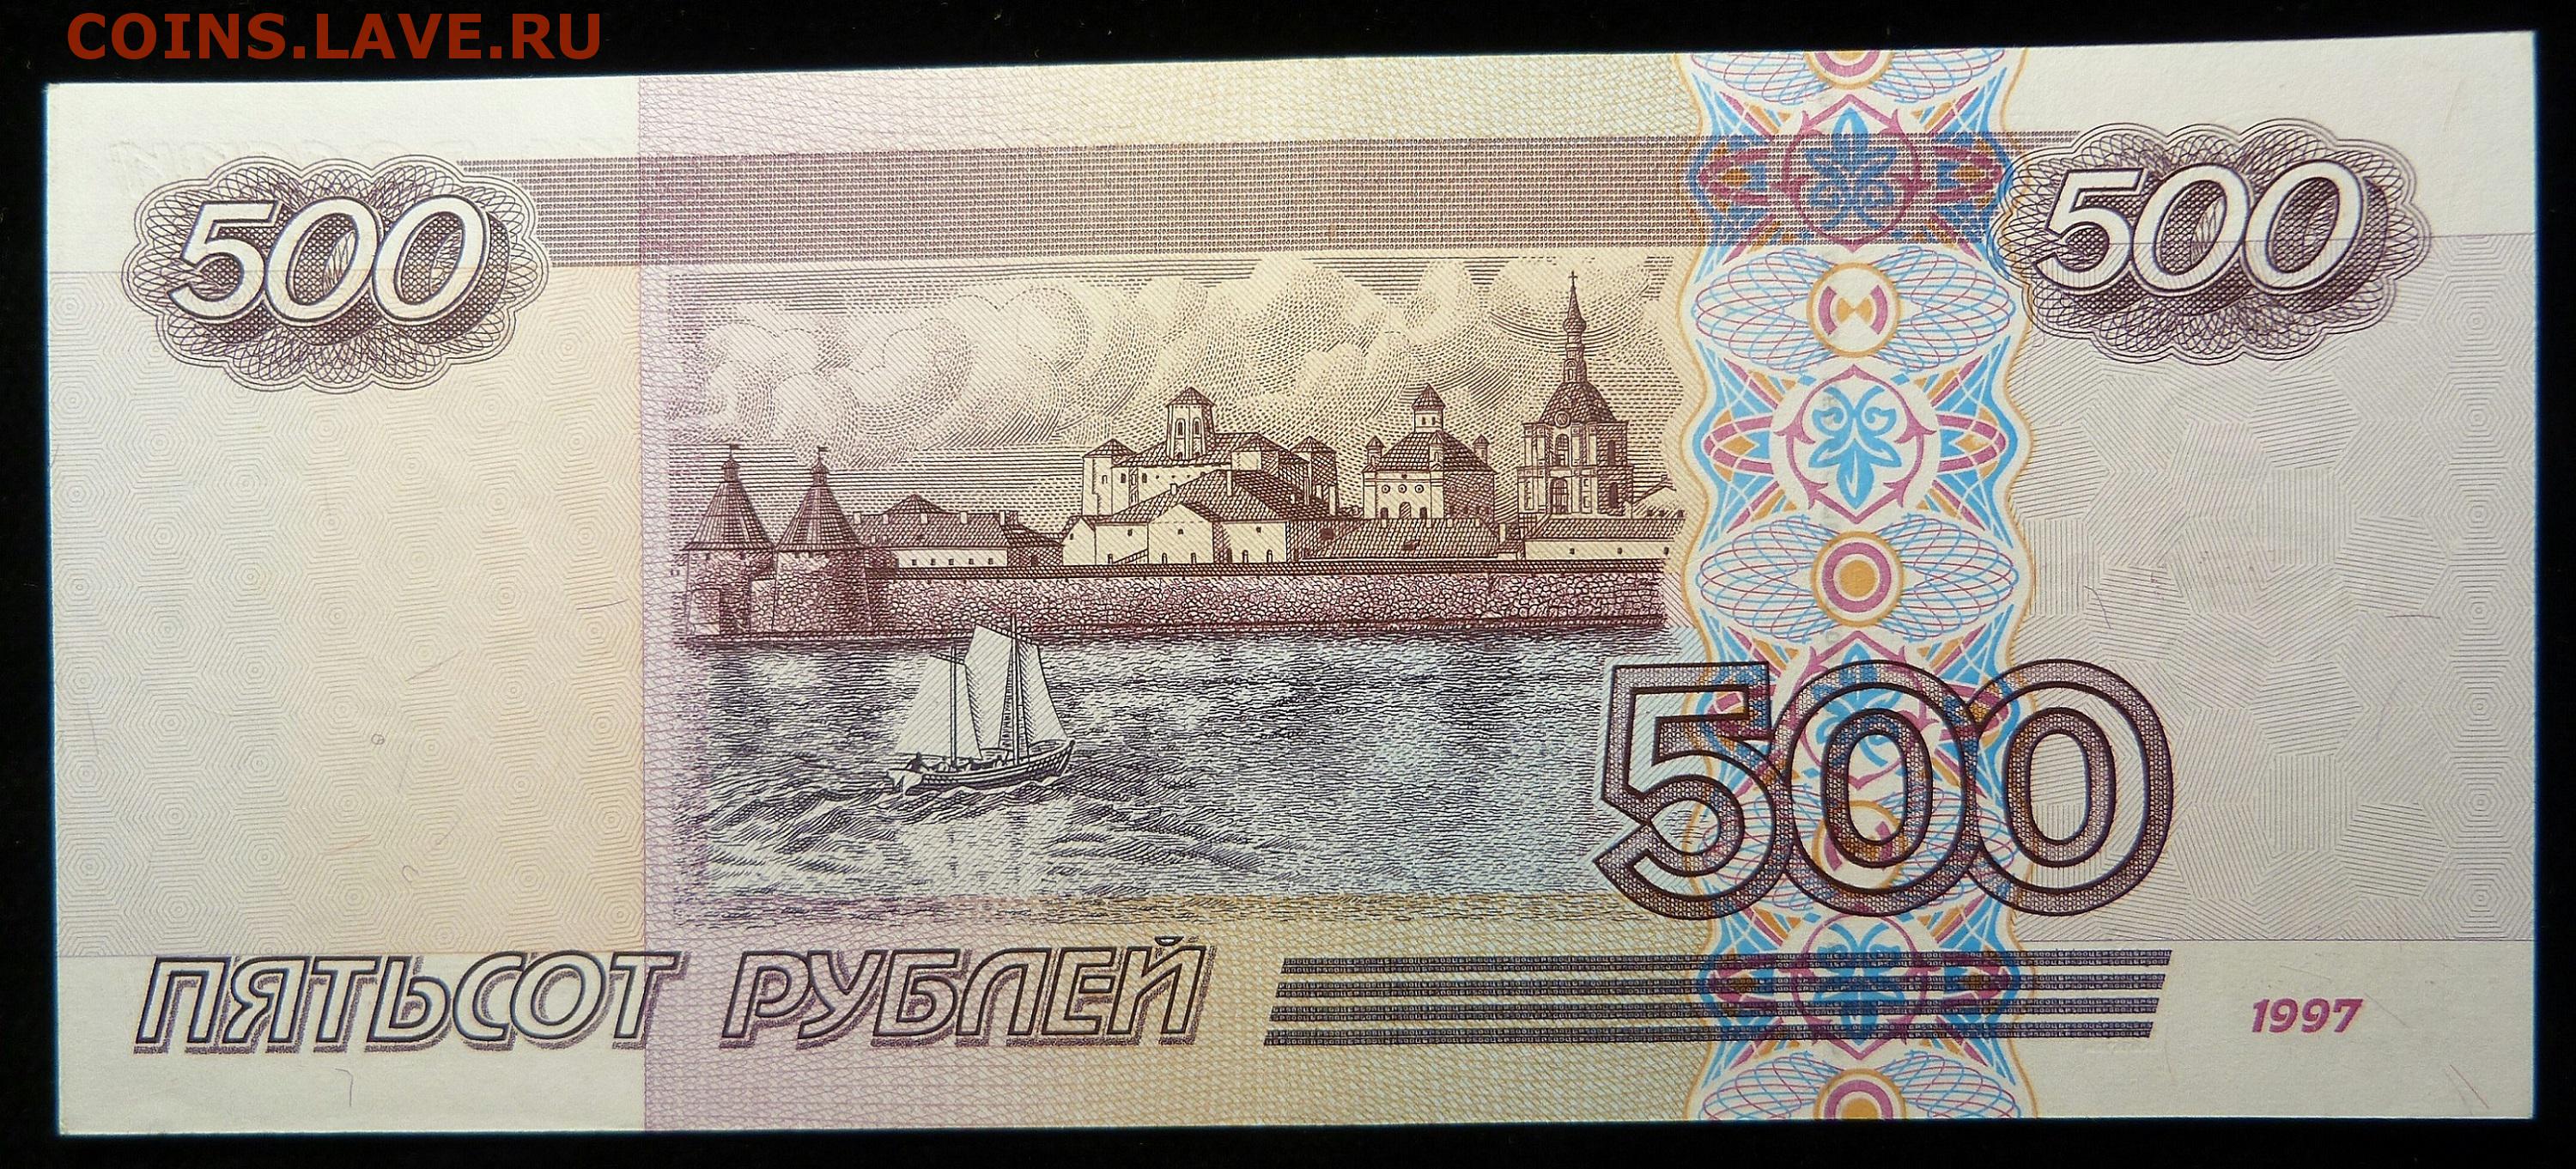 Пятьсот пять рублей. 500 Рублей 1997 2001 АА. Купюра 500 рублей. 500 Рублей. Купюра 500р.